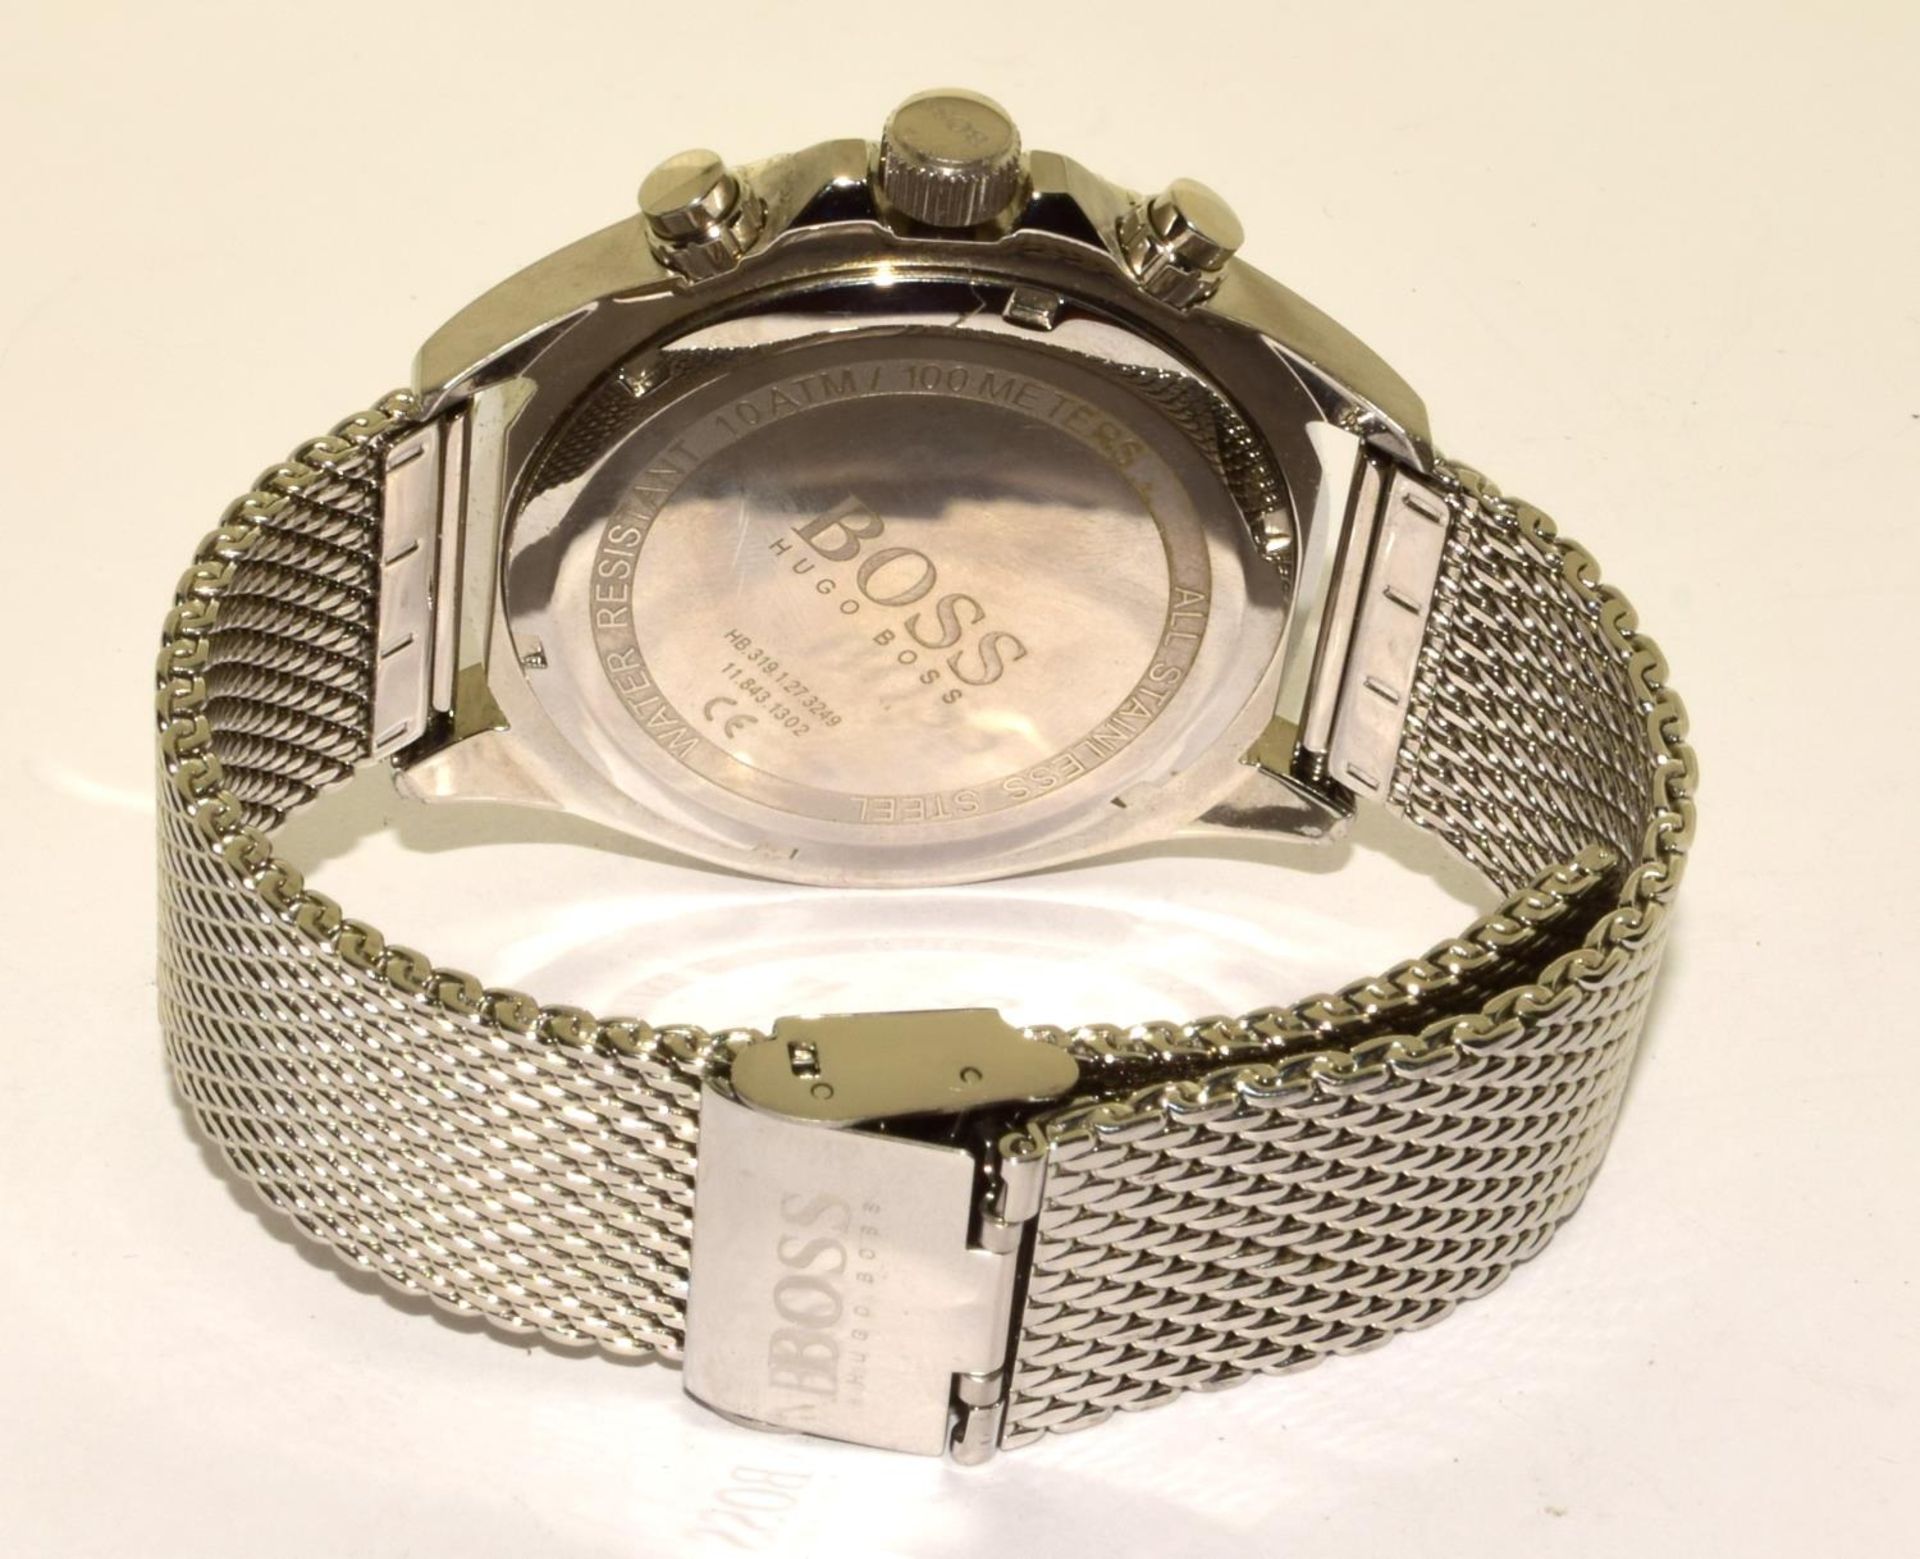 Boss ocean Edition chronograph fashion watch ref 22 - Image 5 of 6